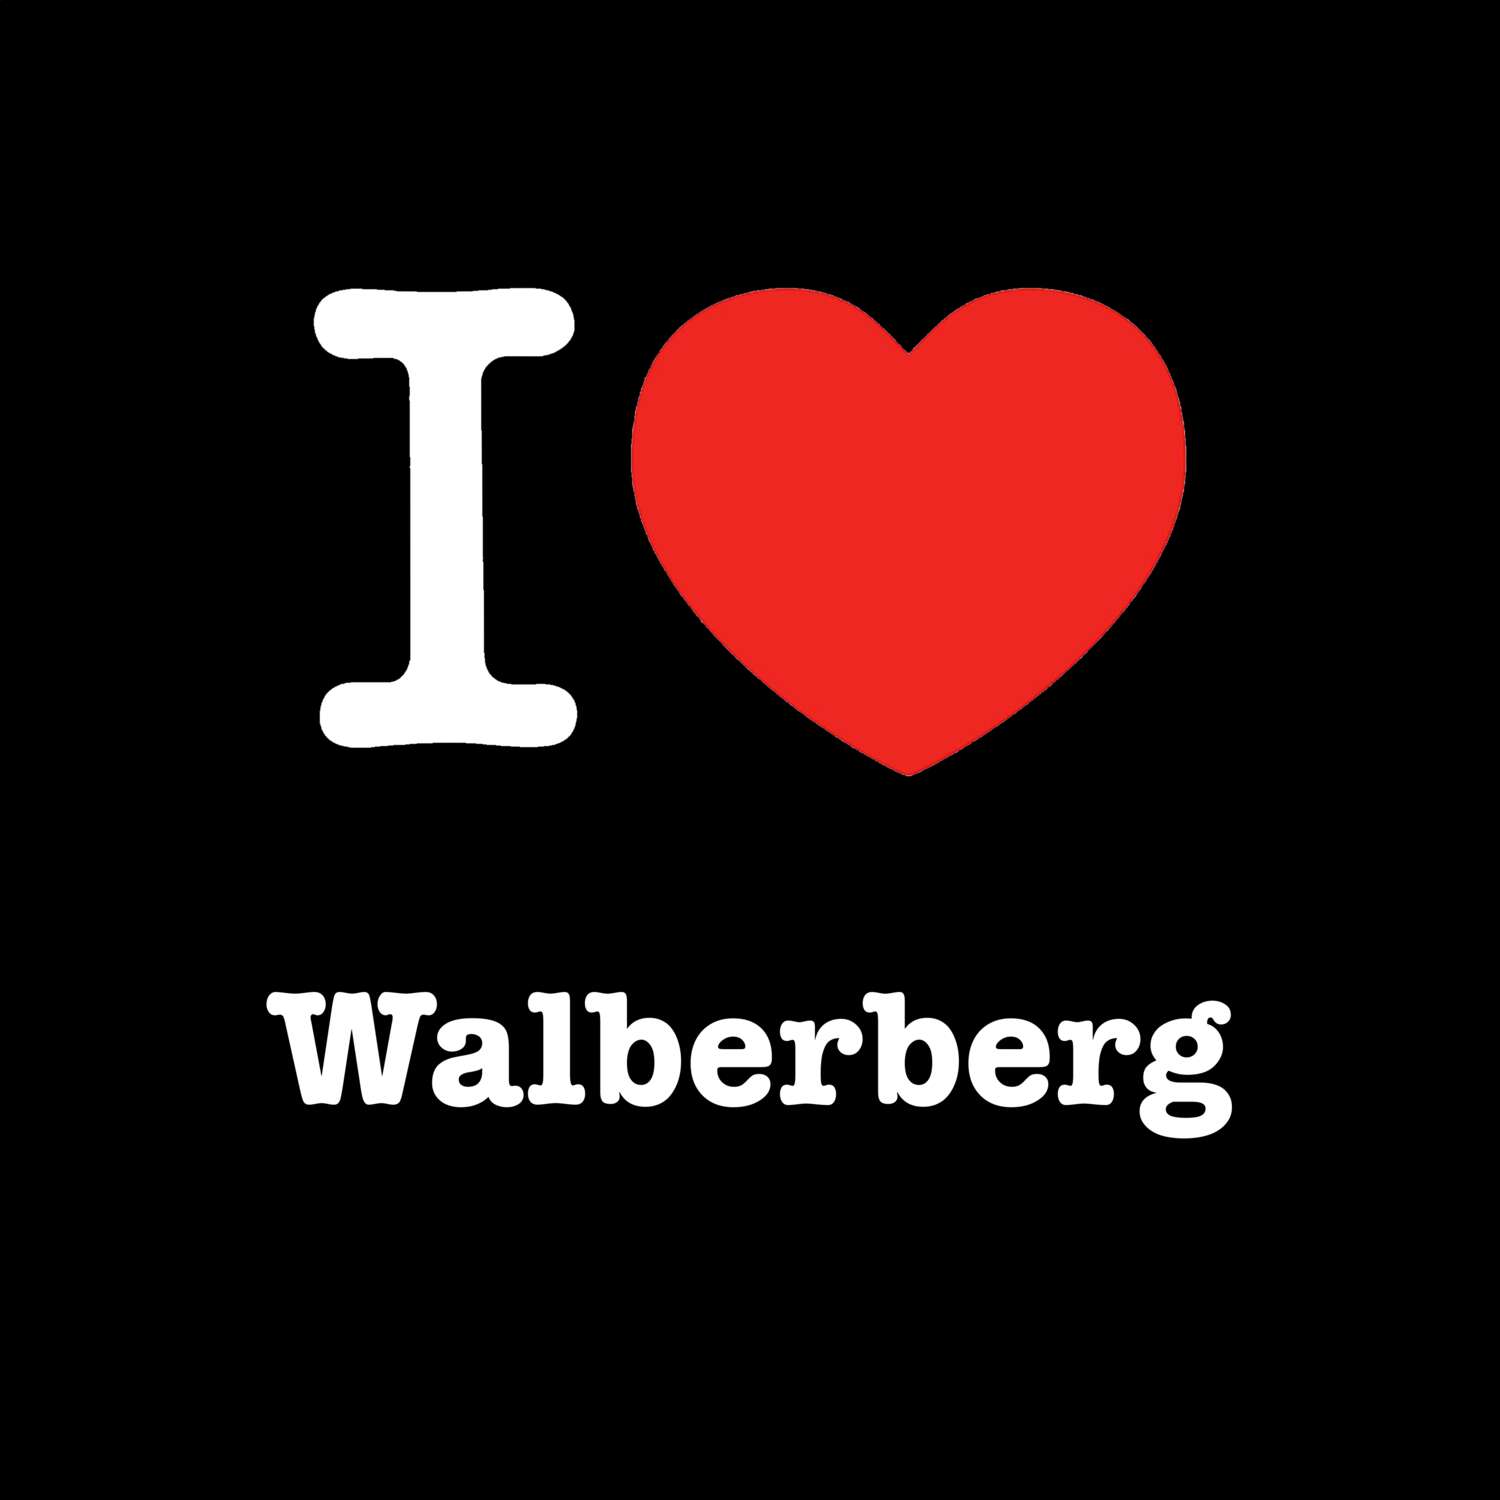 Walberberg T-Shirt »I love«